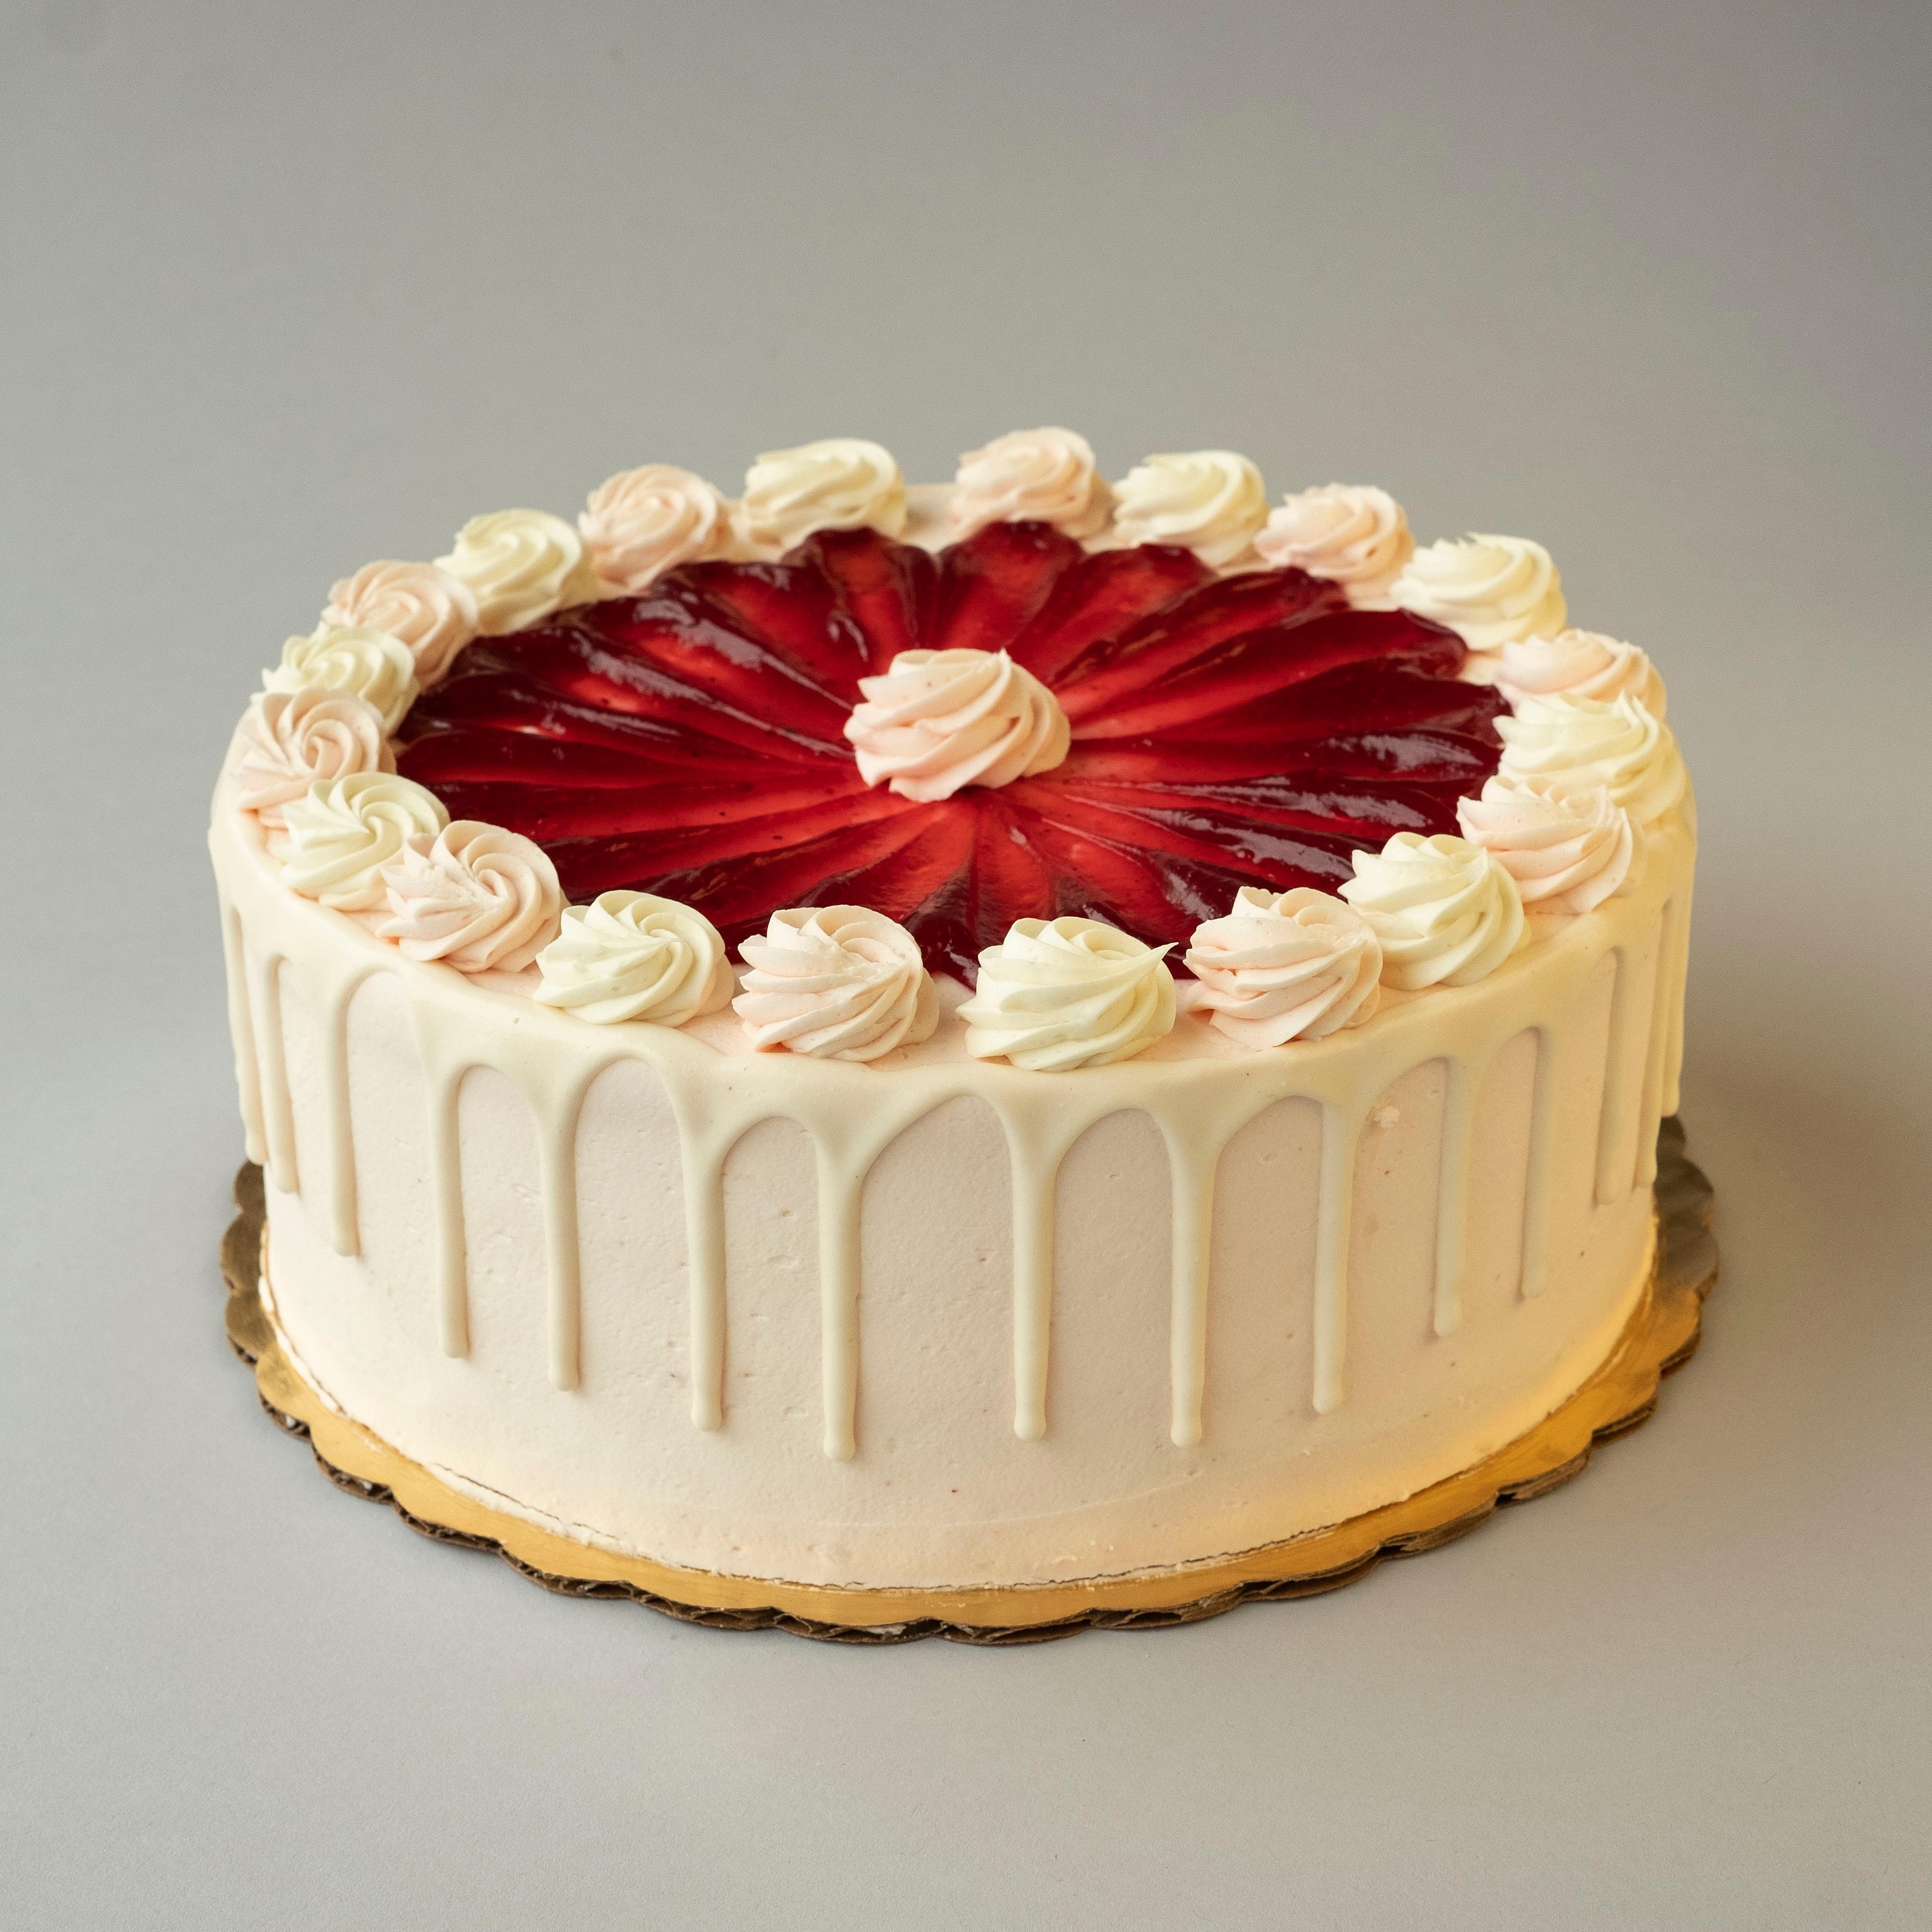 Strawberry Mousse Cake - A Baking Journey